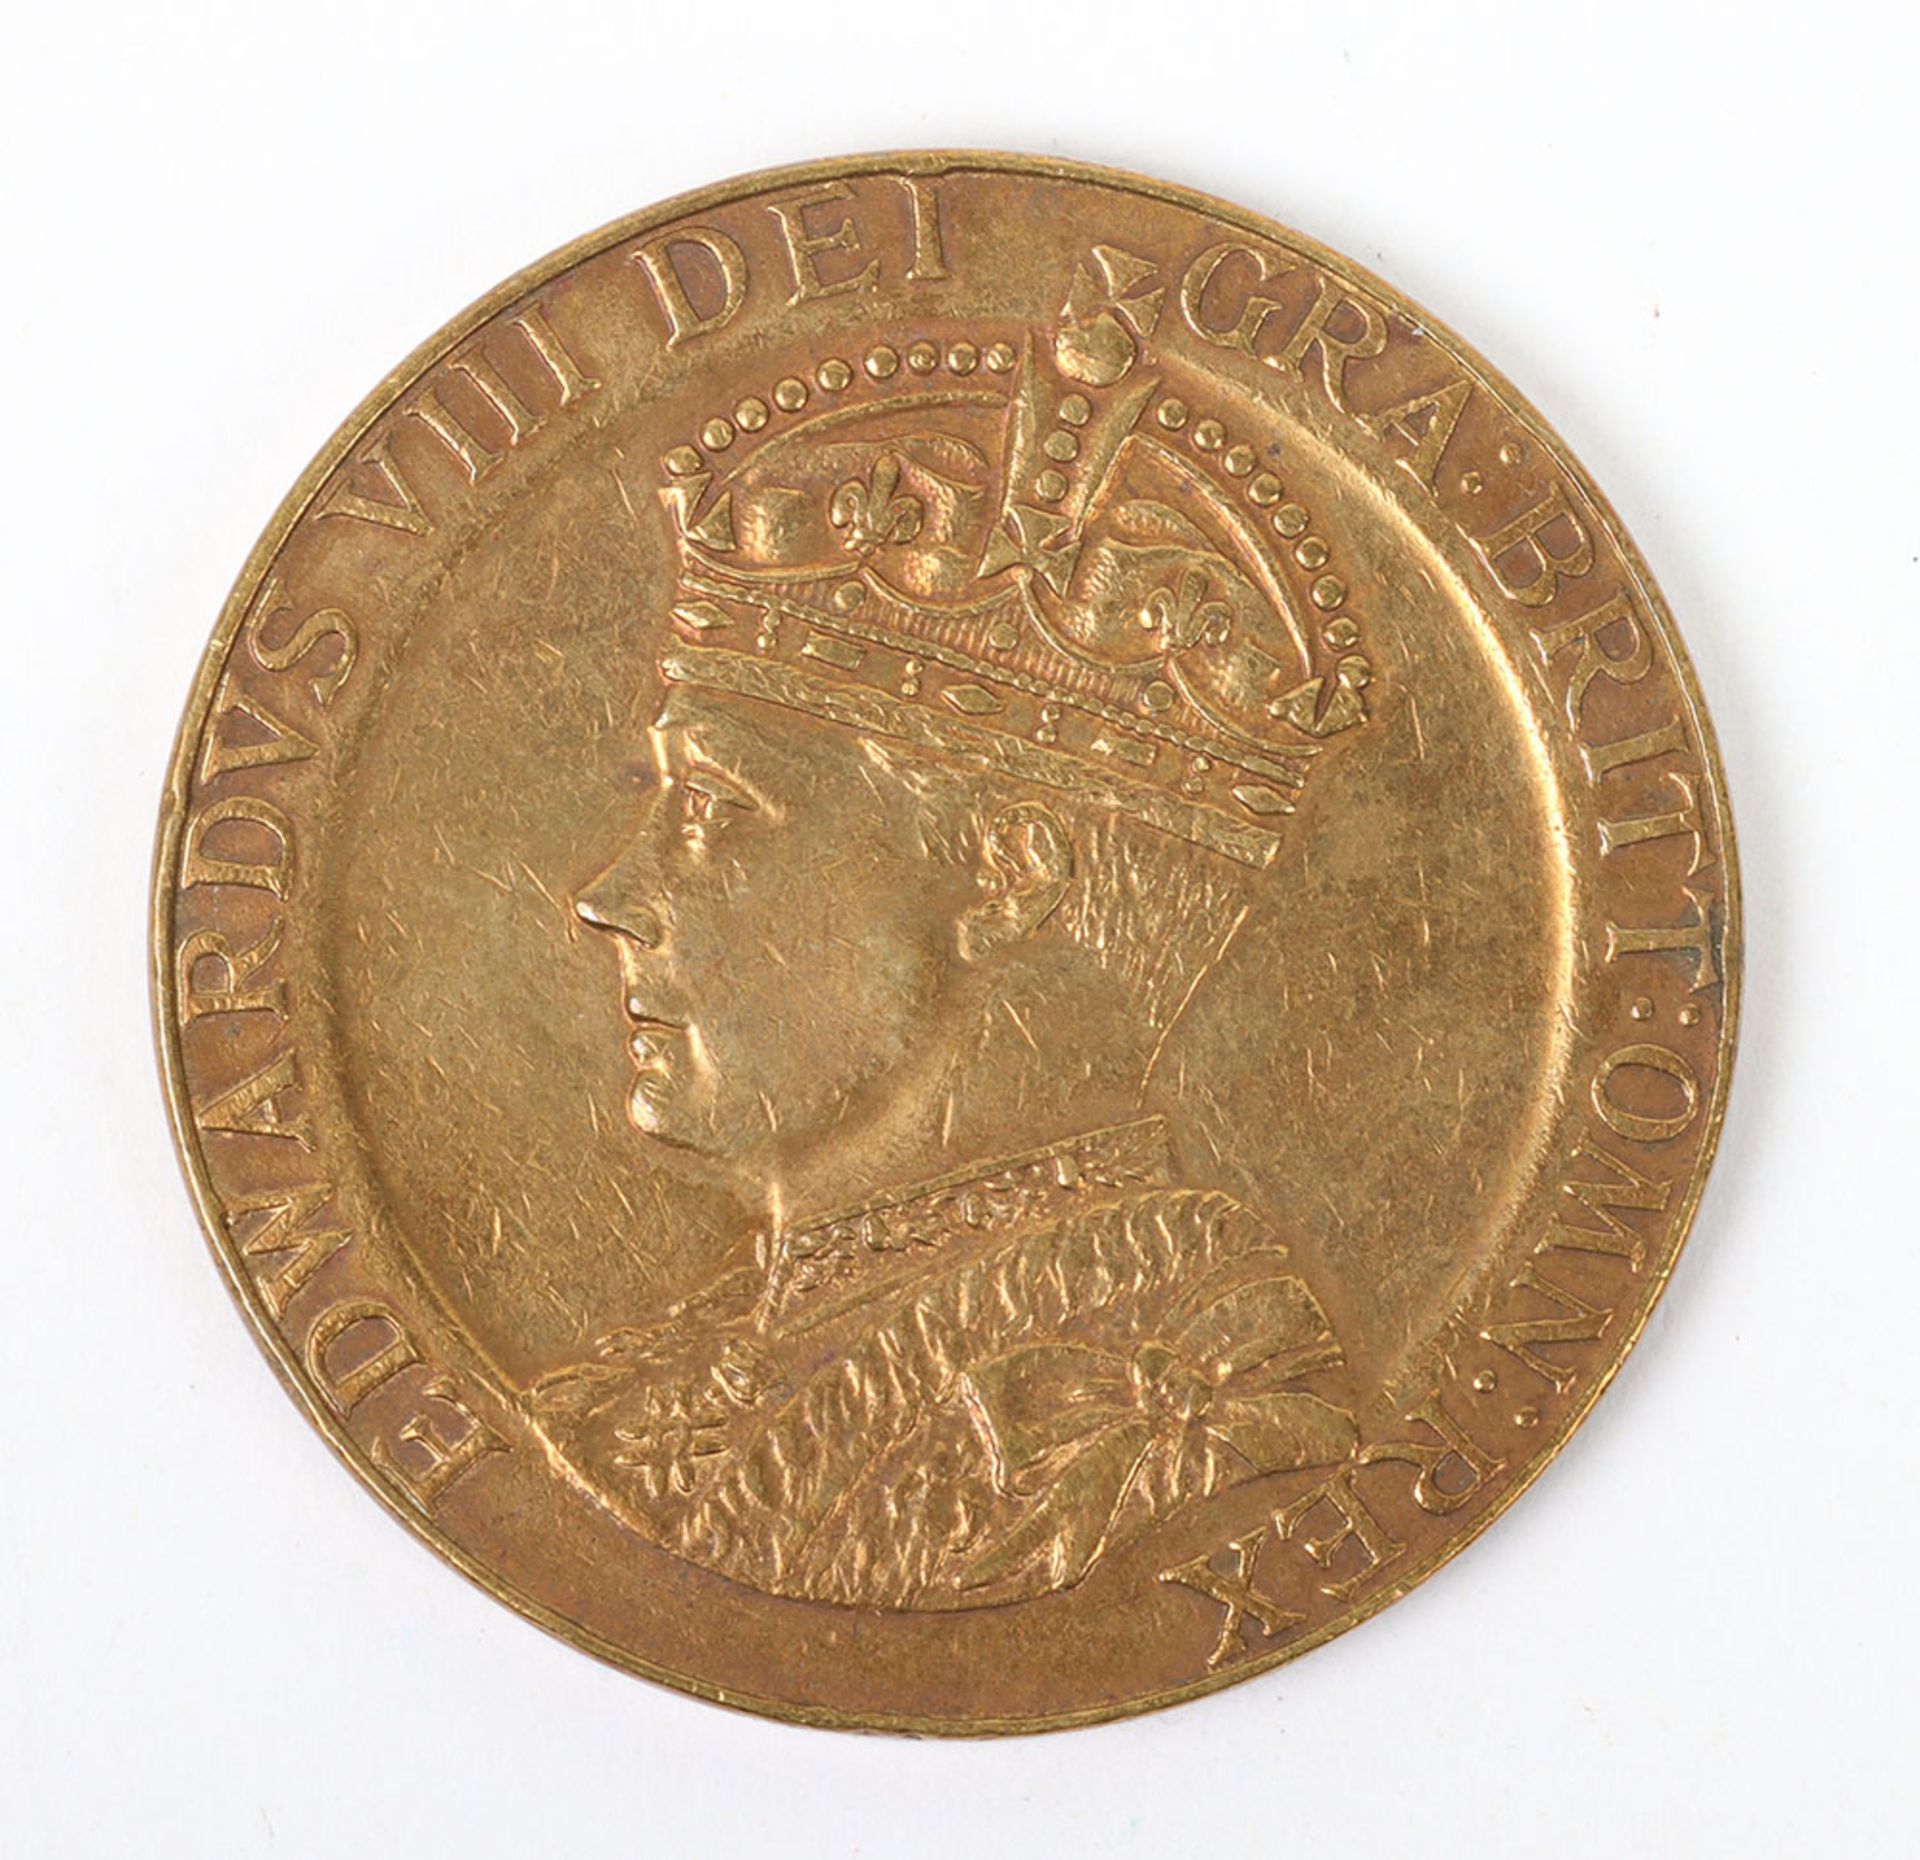 Edward VIII 1937 Coronation Medal